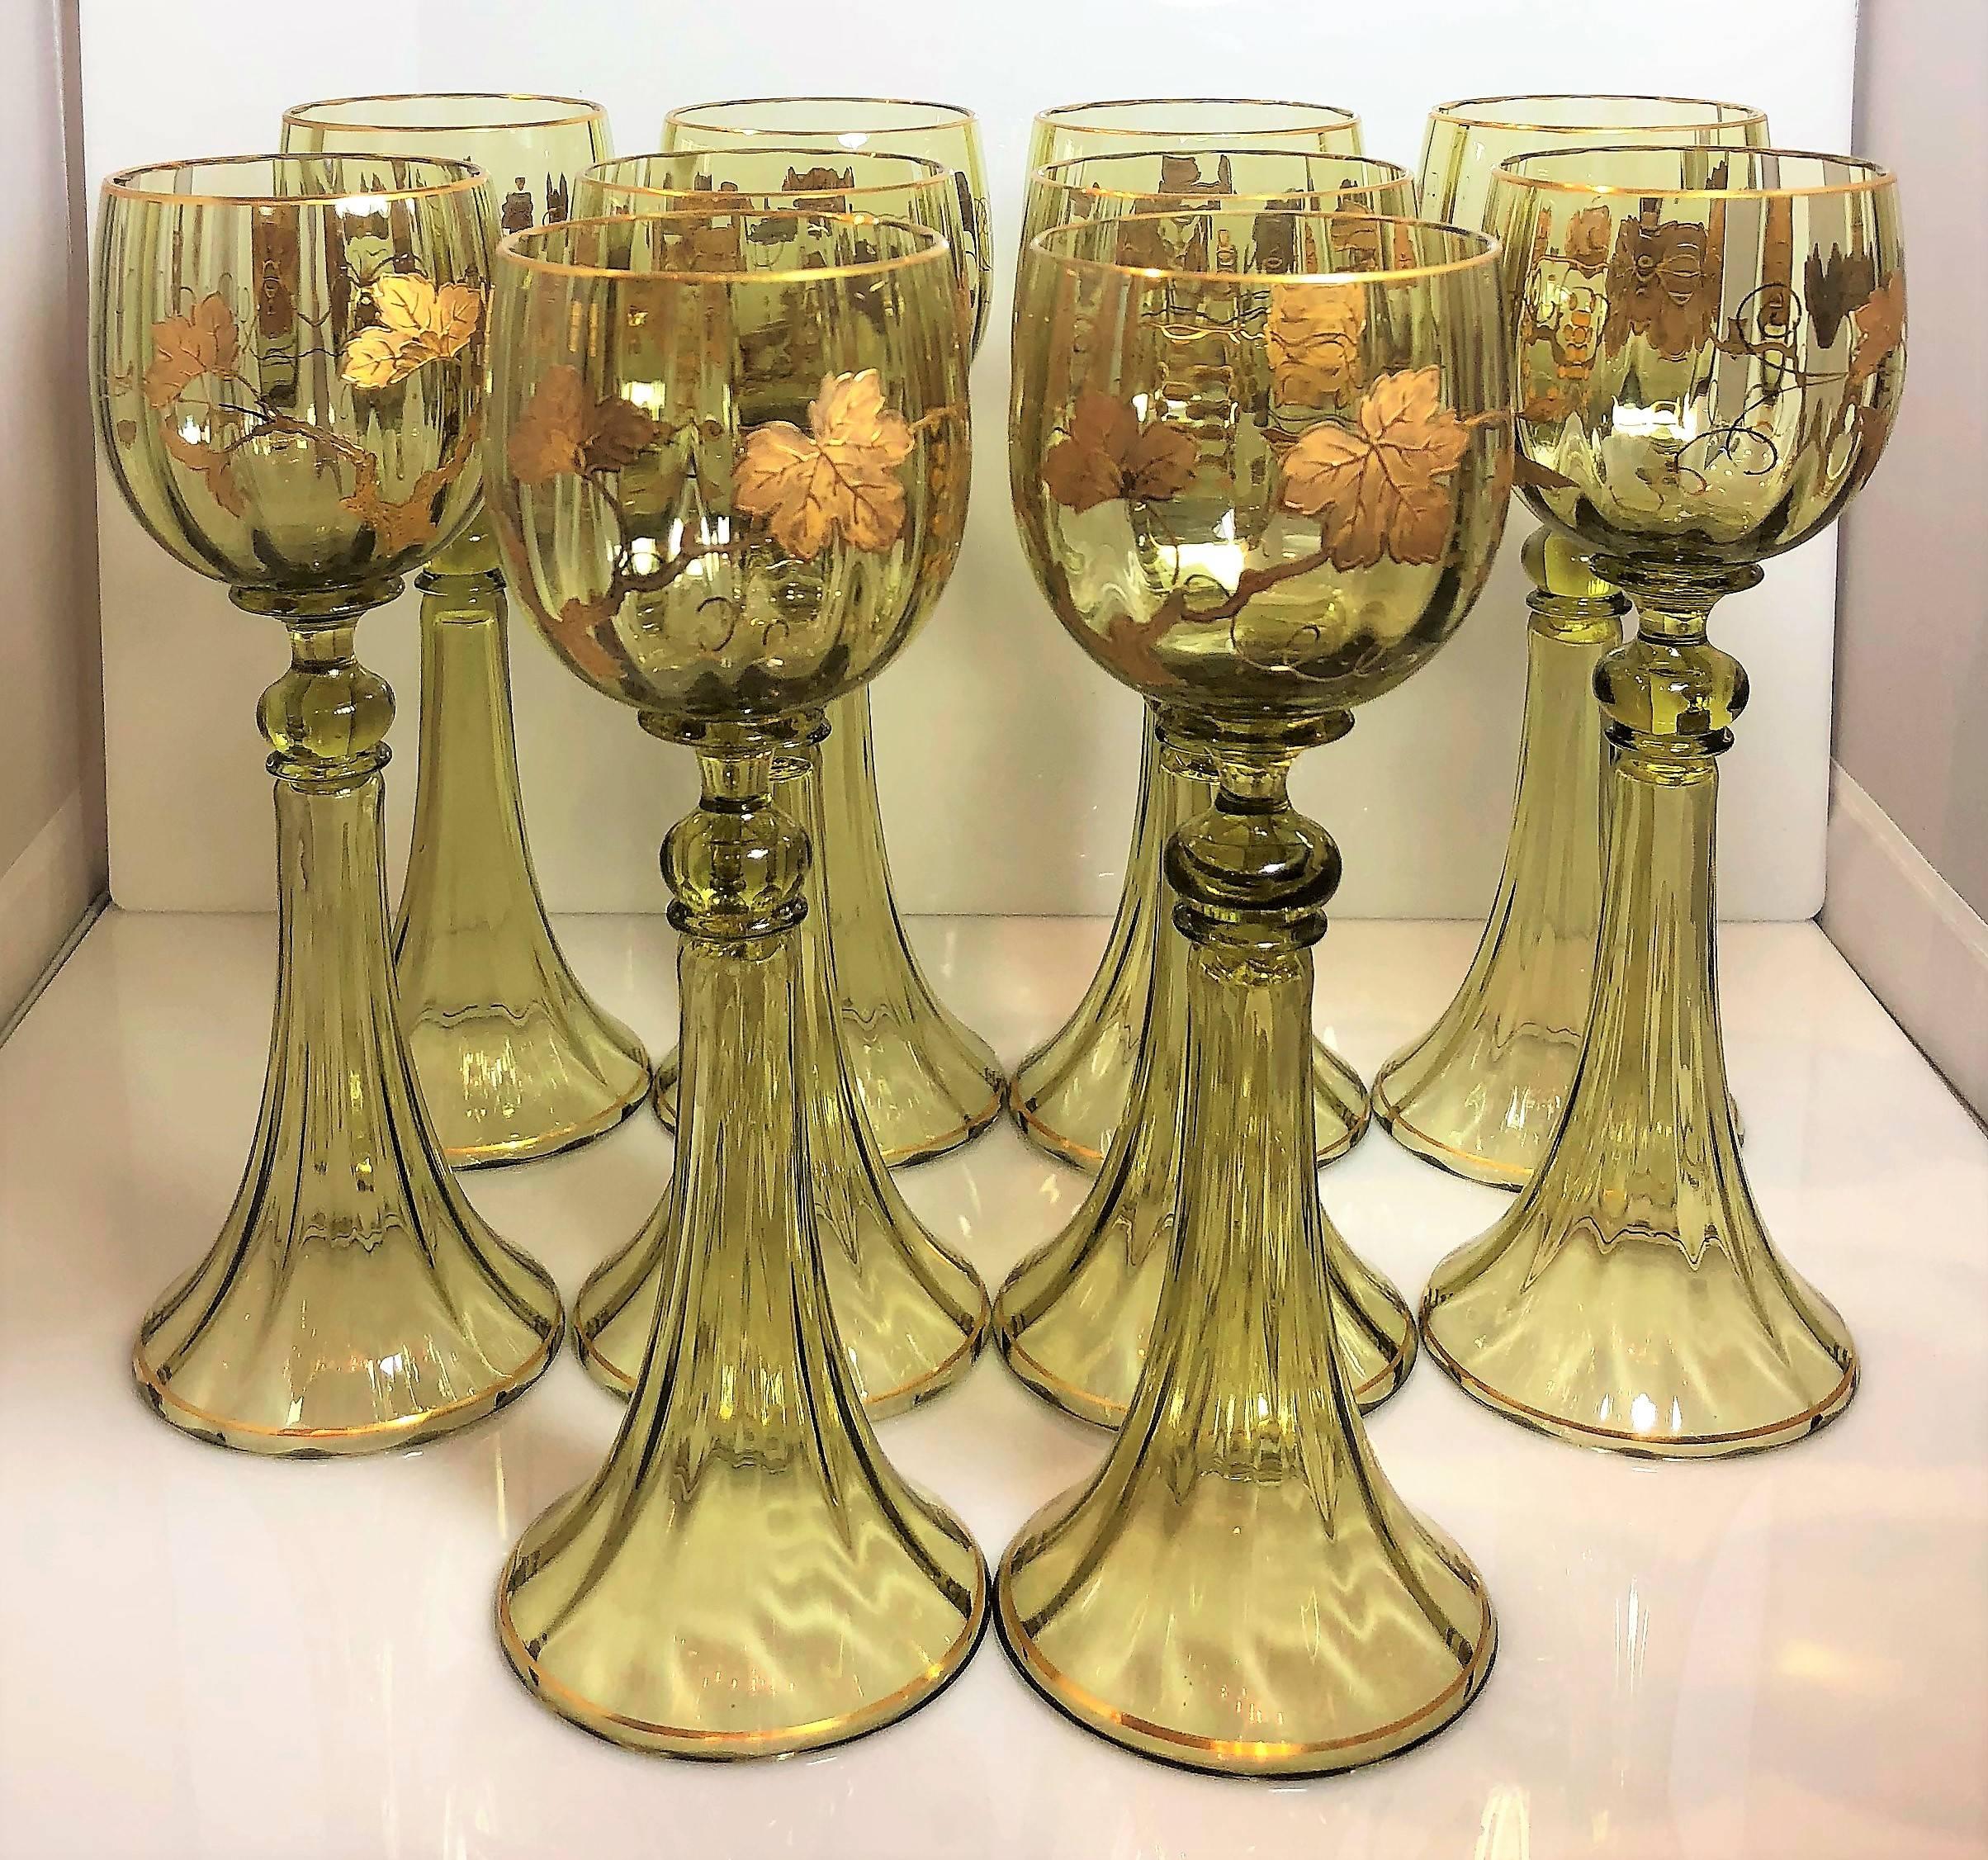 Set of ten antique German Rhine wine glasses, circa 1910.